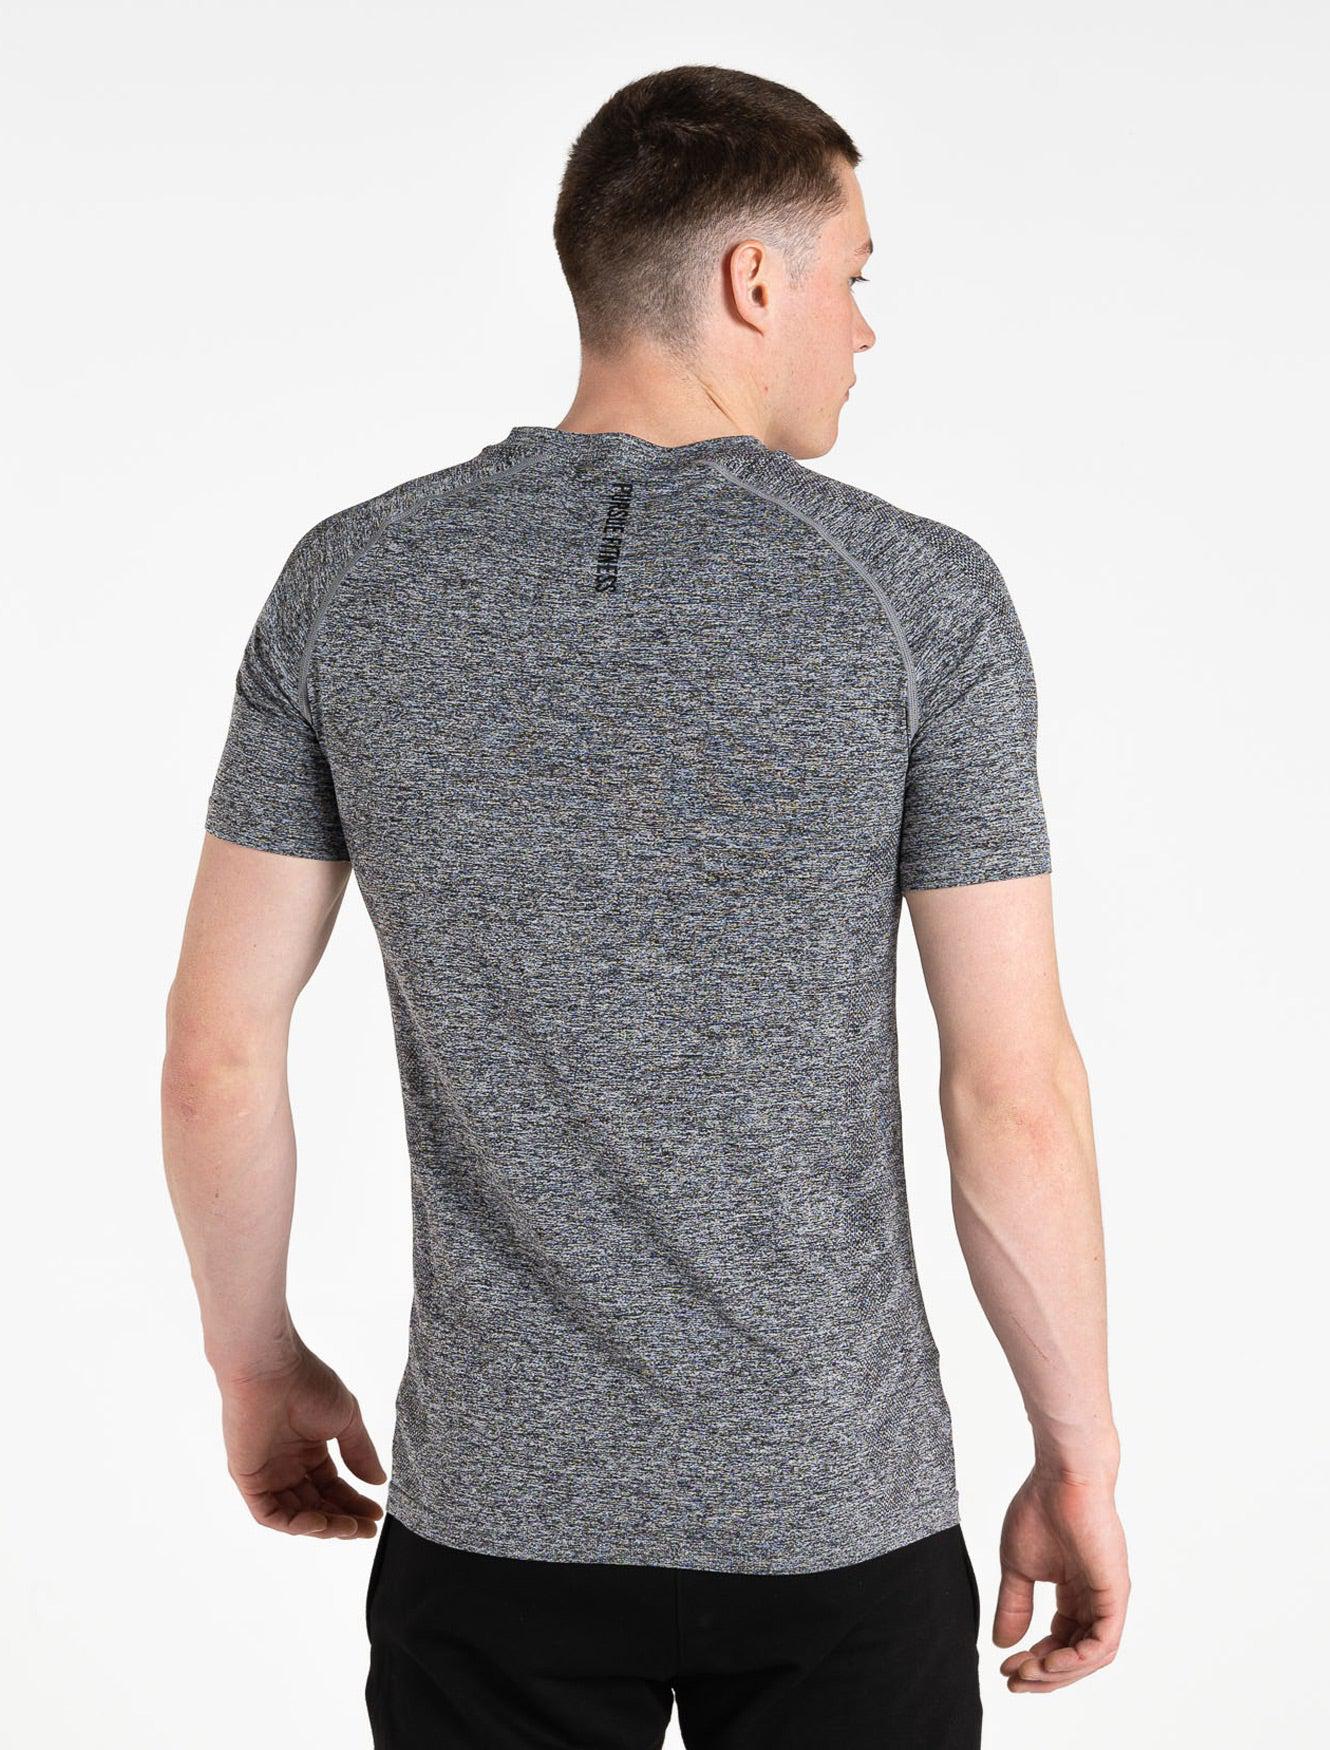 Intensity Seamless T-Shirt, Charcoal Marl